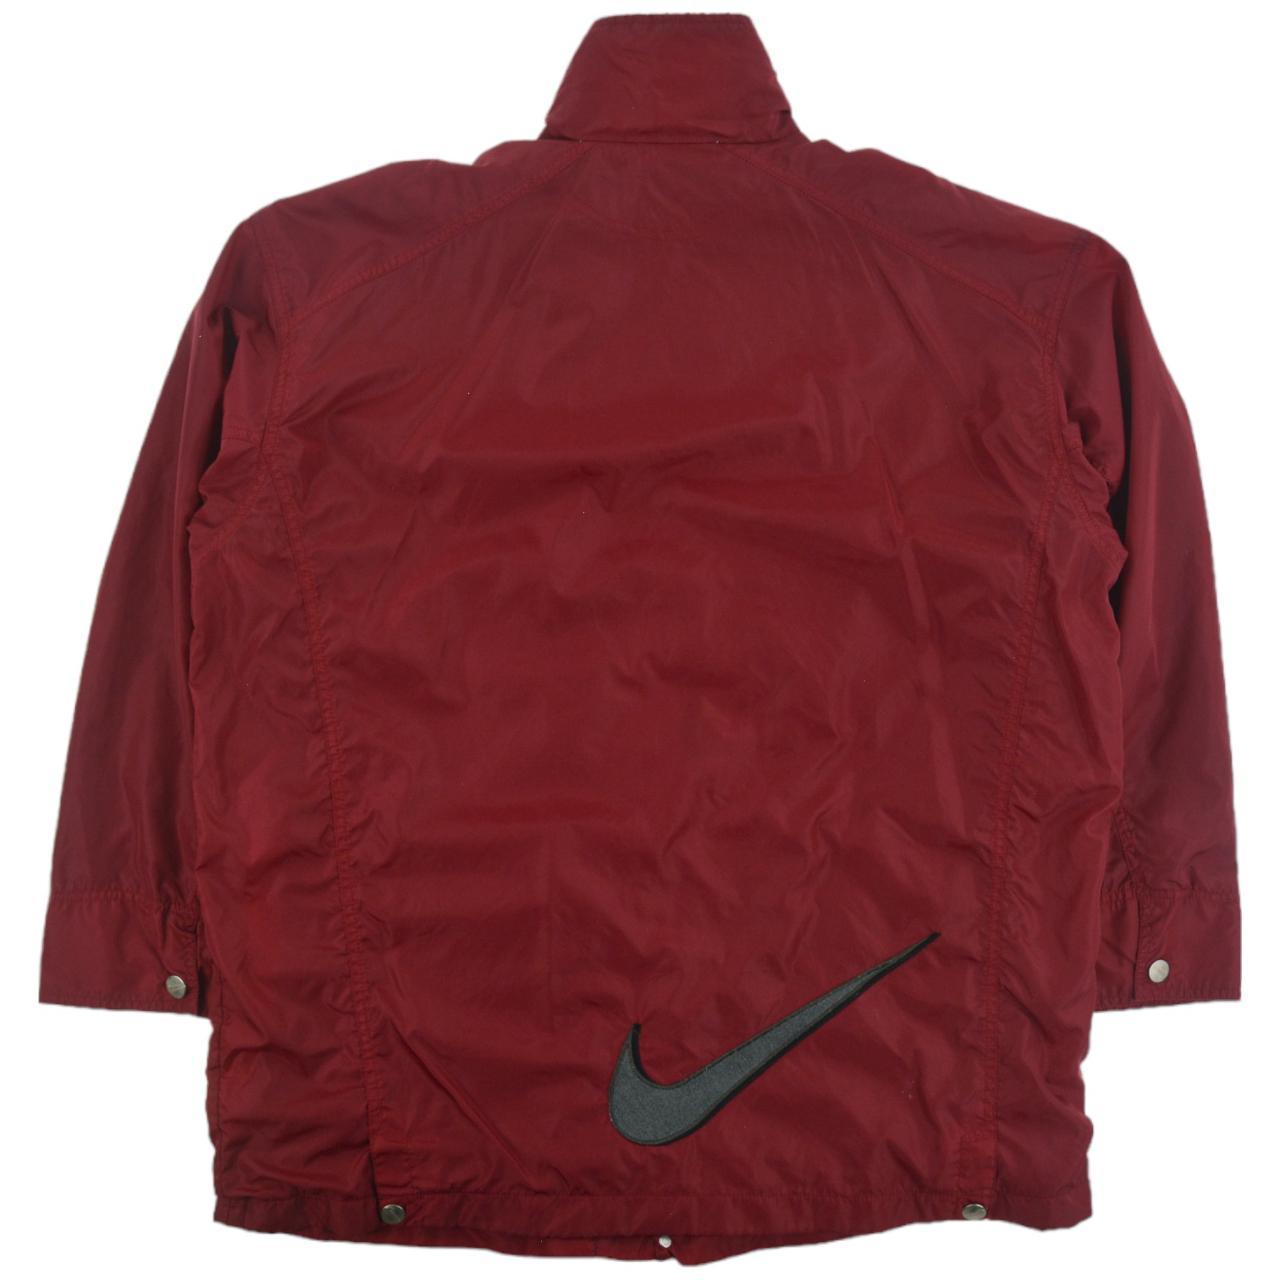 Vintage Nike Swoosh Coach Jacket Size XL - Known Source